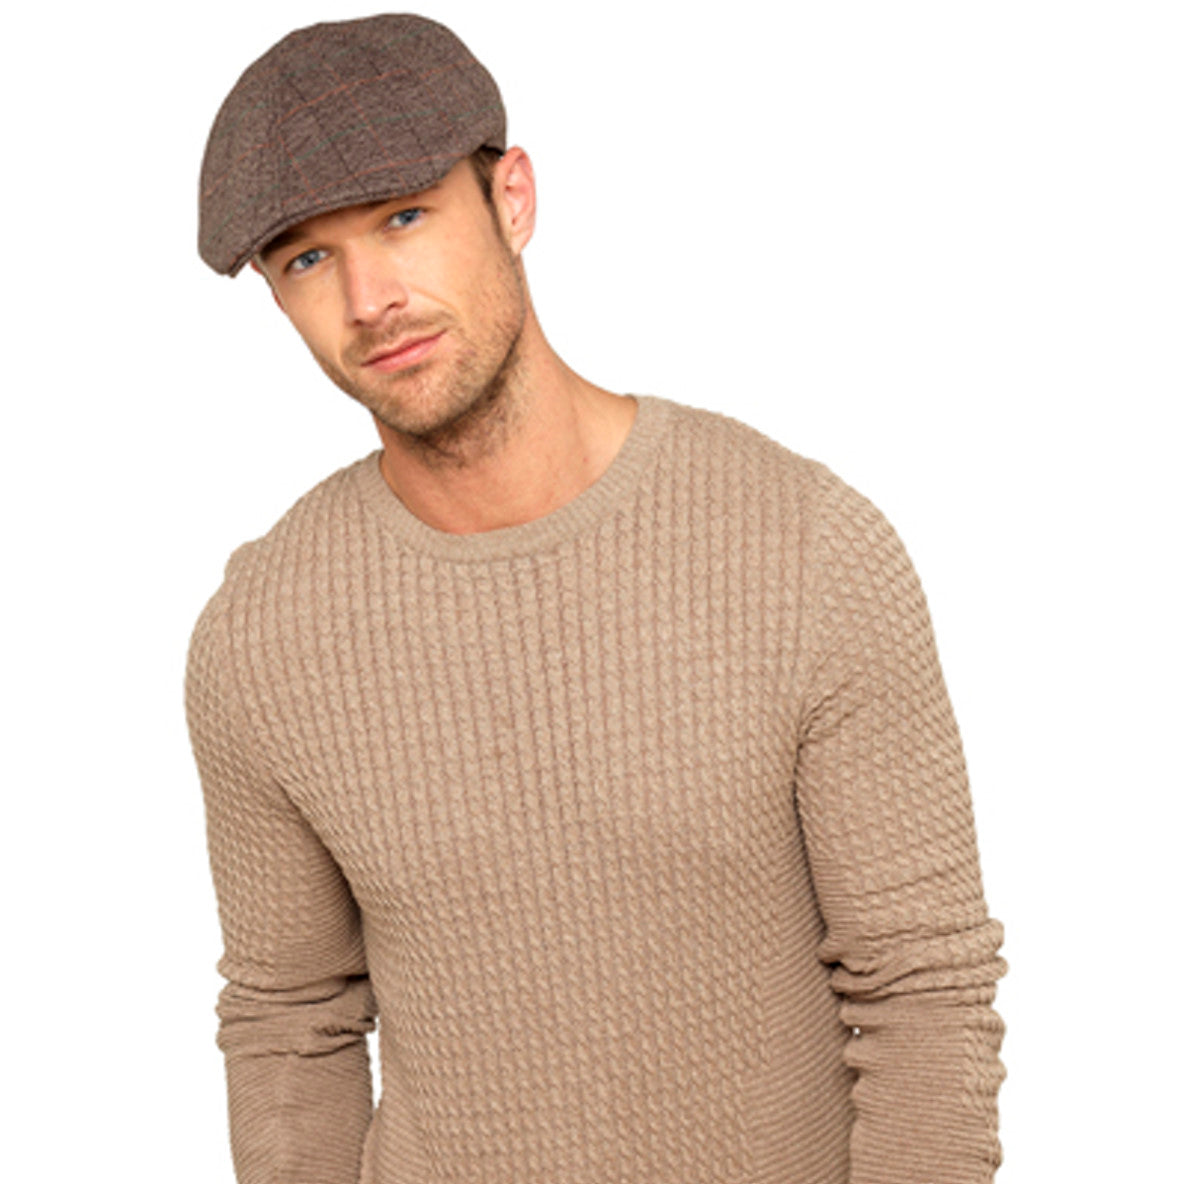 Men's Tweed Wool Flat Cap 2 Sizes Available